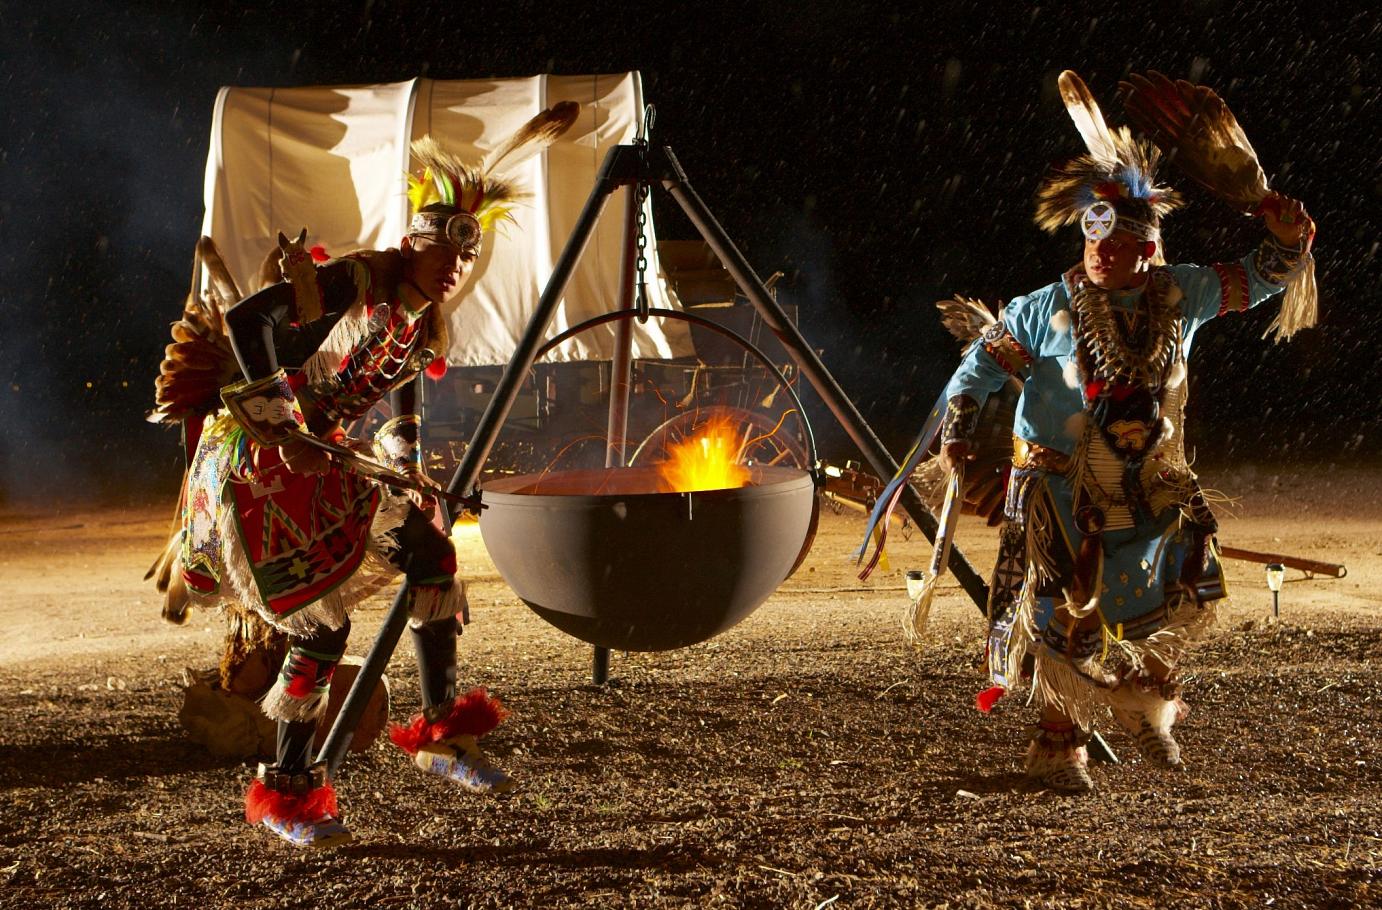 Contagious native dancing around the cauldron.